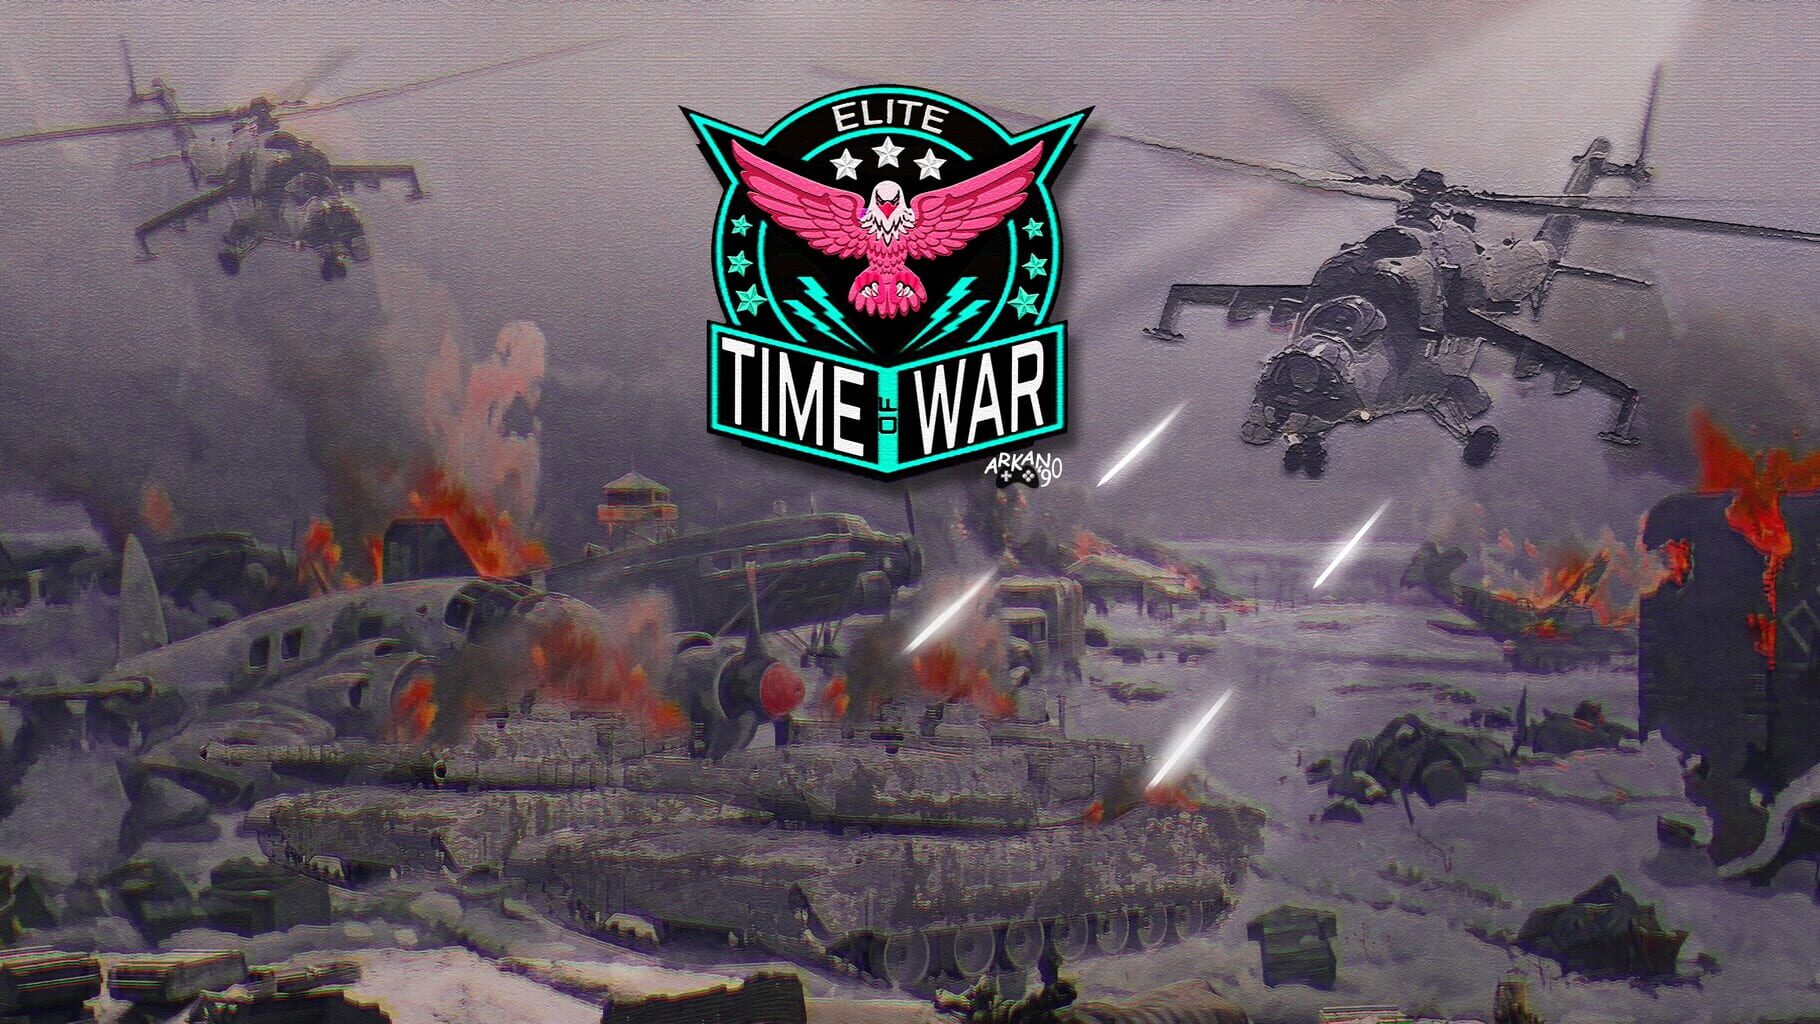 Time of War, Arkano'90 artwork